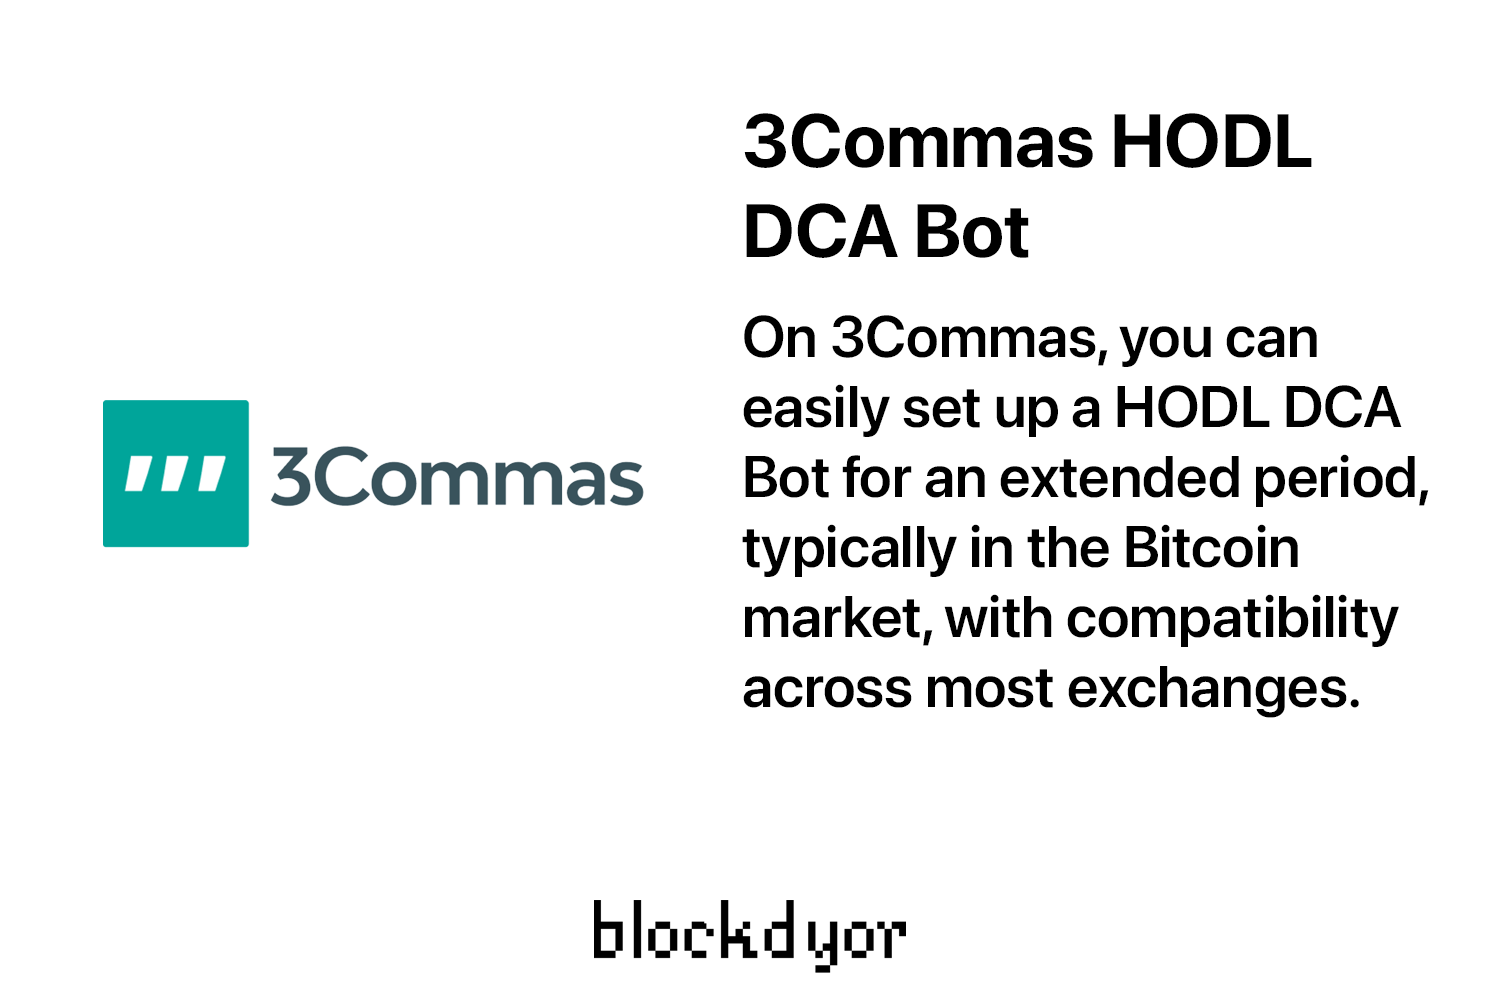 3Commas HODL DCA Bot Overview